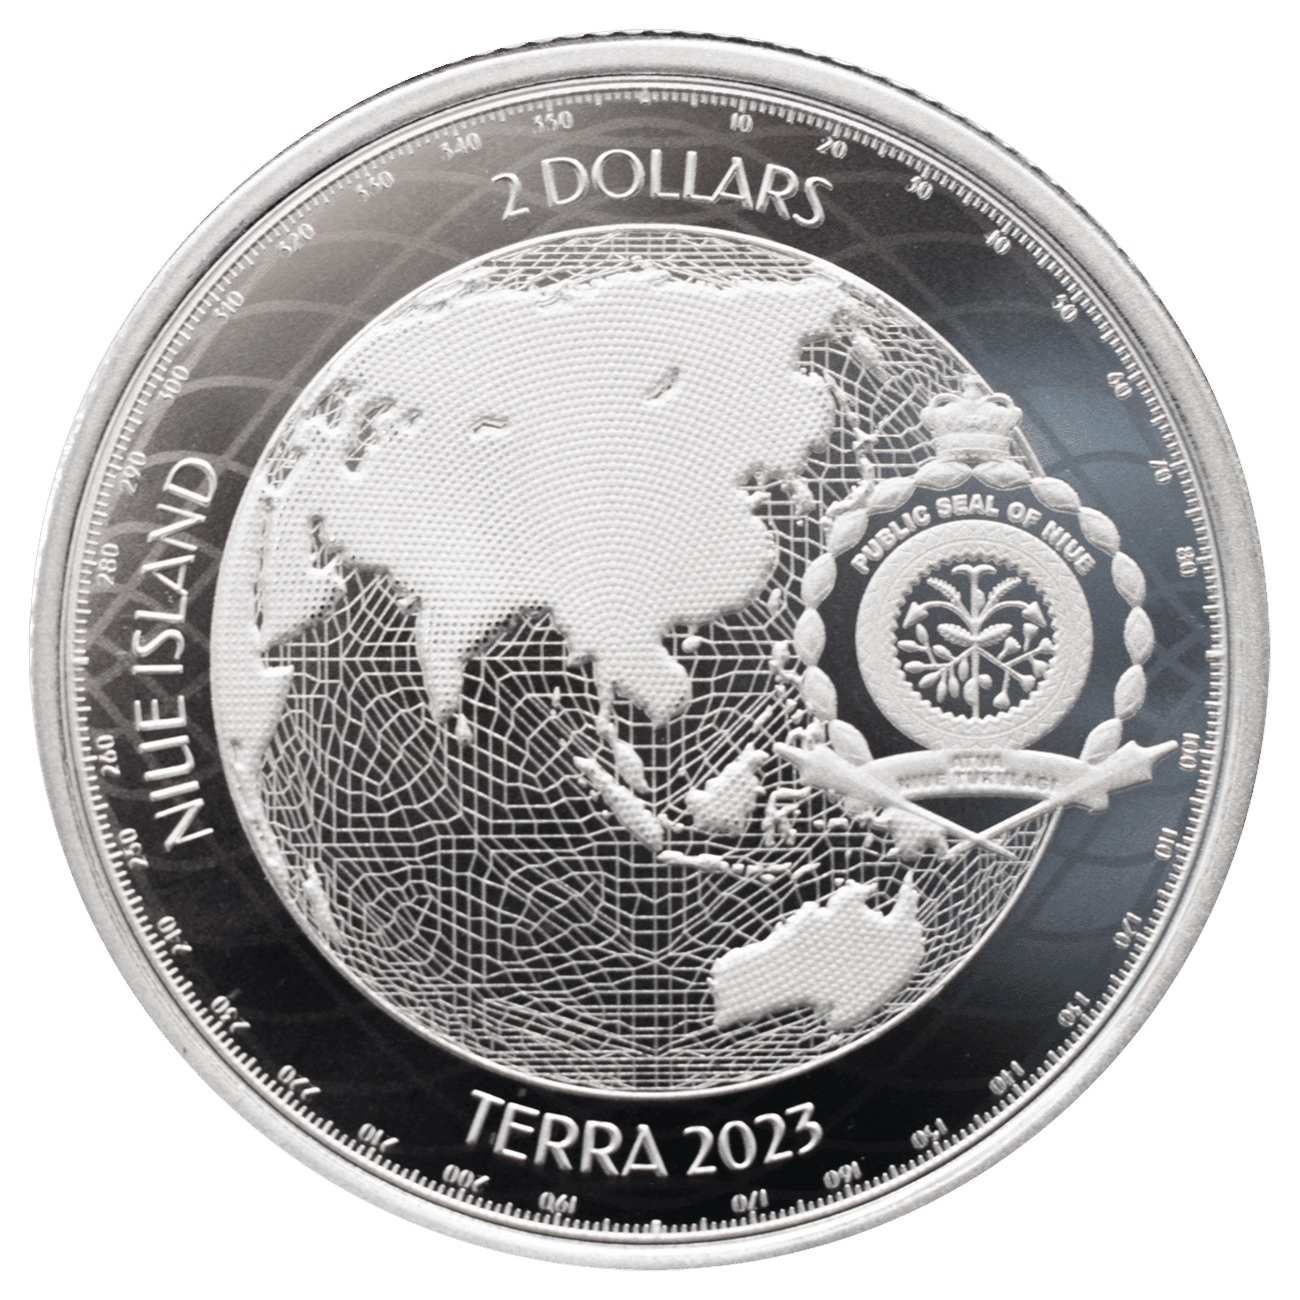 (W160.2.D.2023.1.oz.Ag.3) 2 Dollars Niue 2023 1 oz silver - Terra Obverse (zoom)